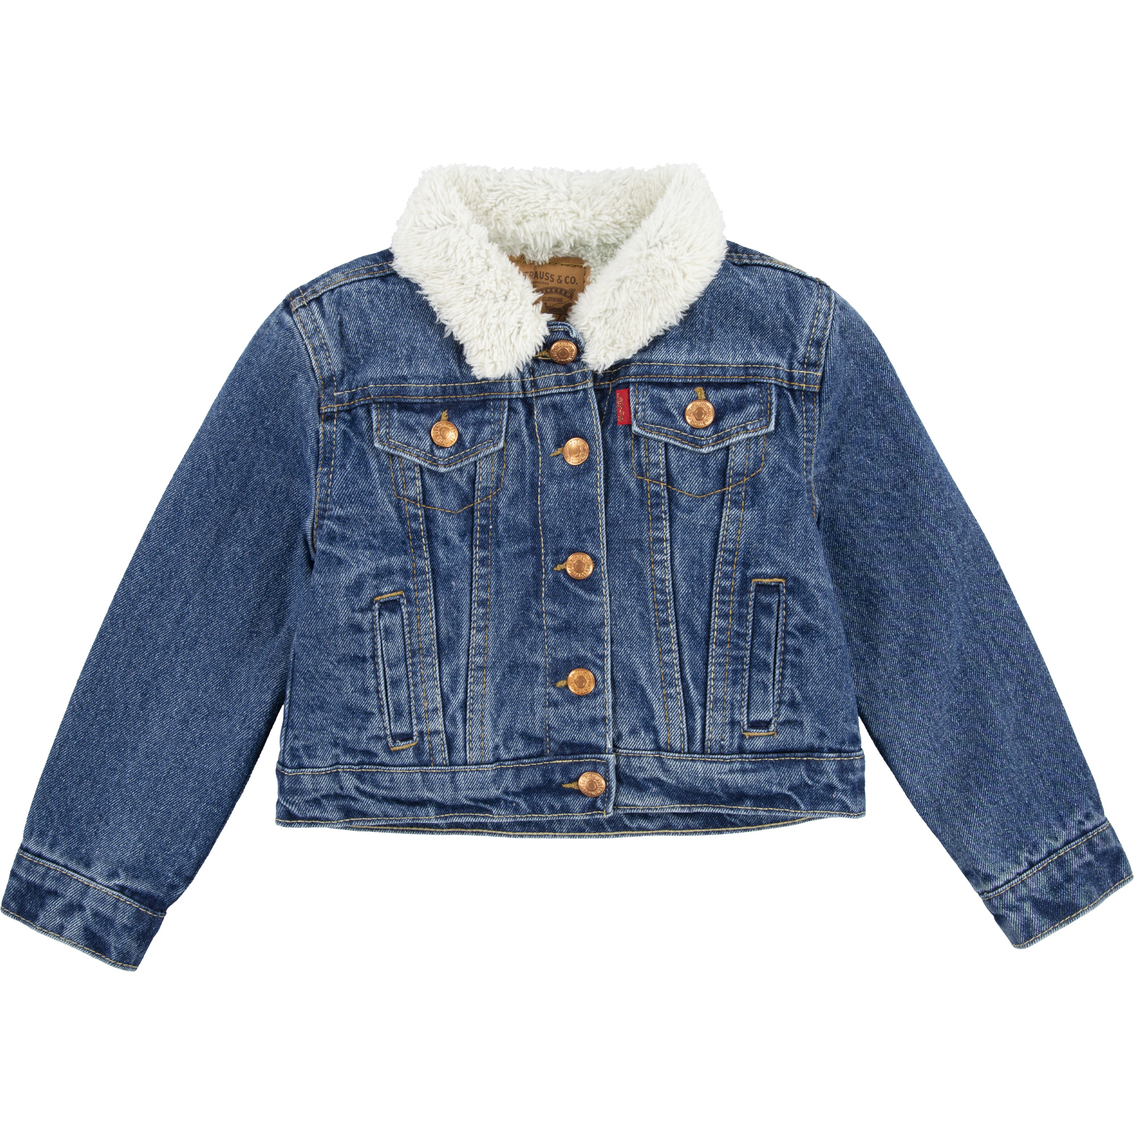 Levi's Toddler Girls Sherpa Denim Trucker Jacket | Toddler Girls 2t-4t ...